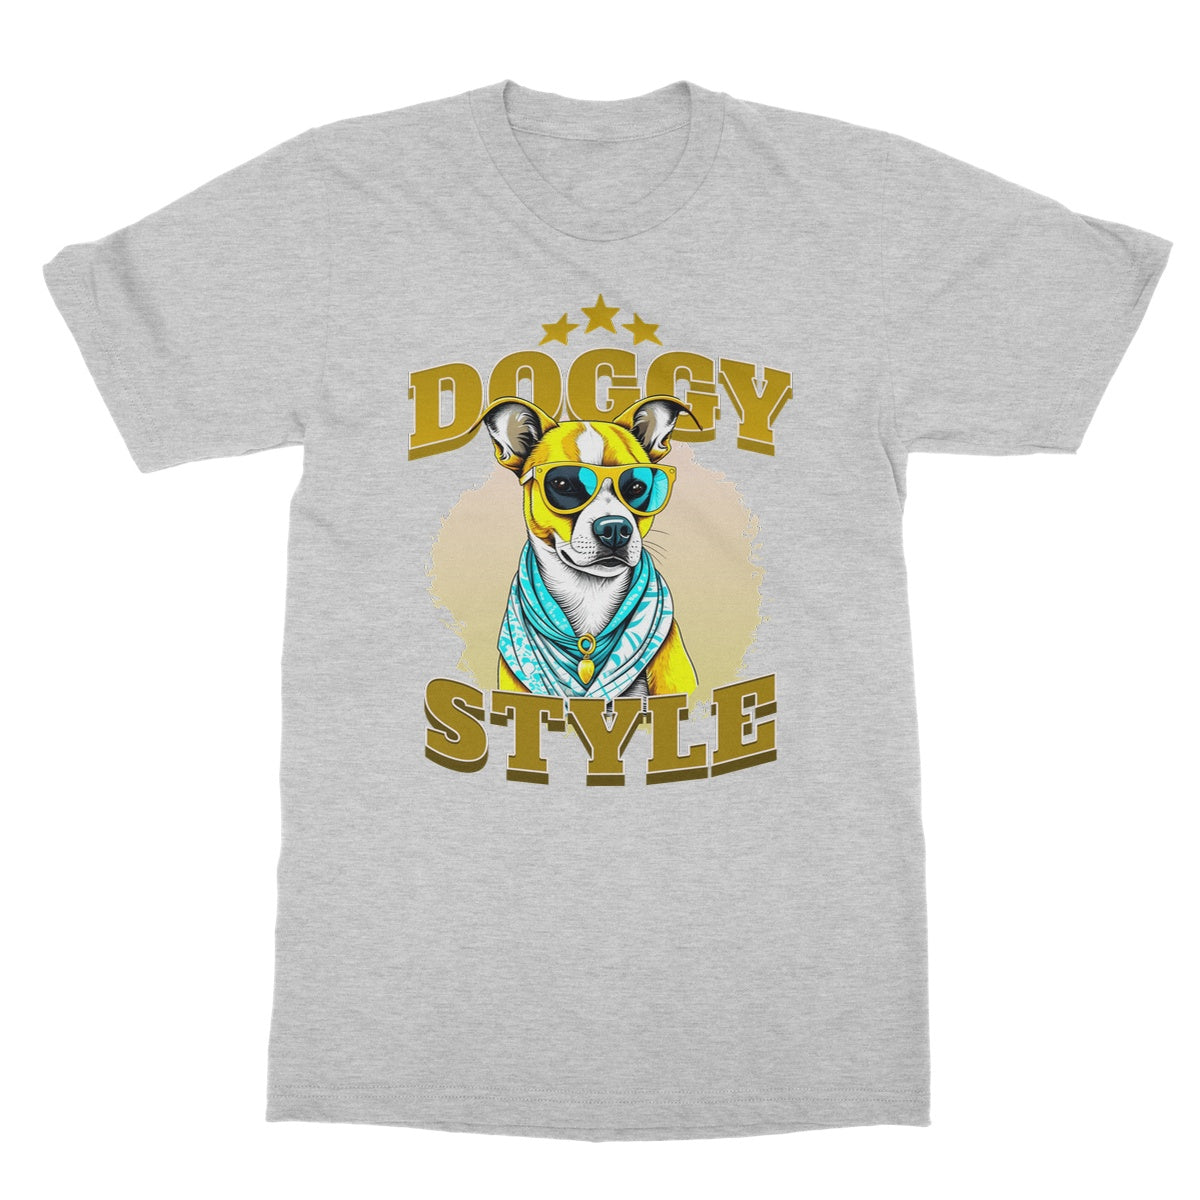 doggy style t shirt grey